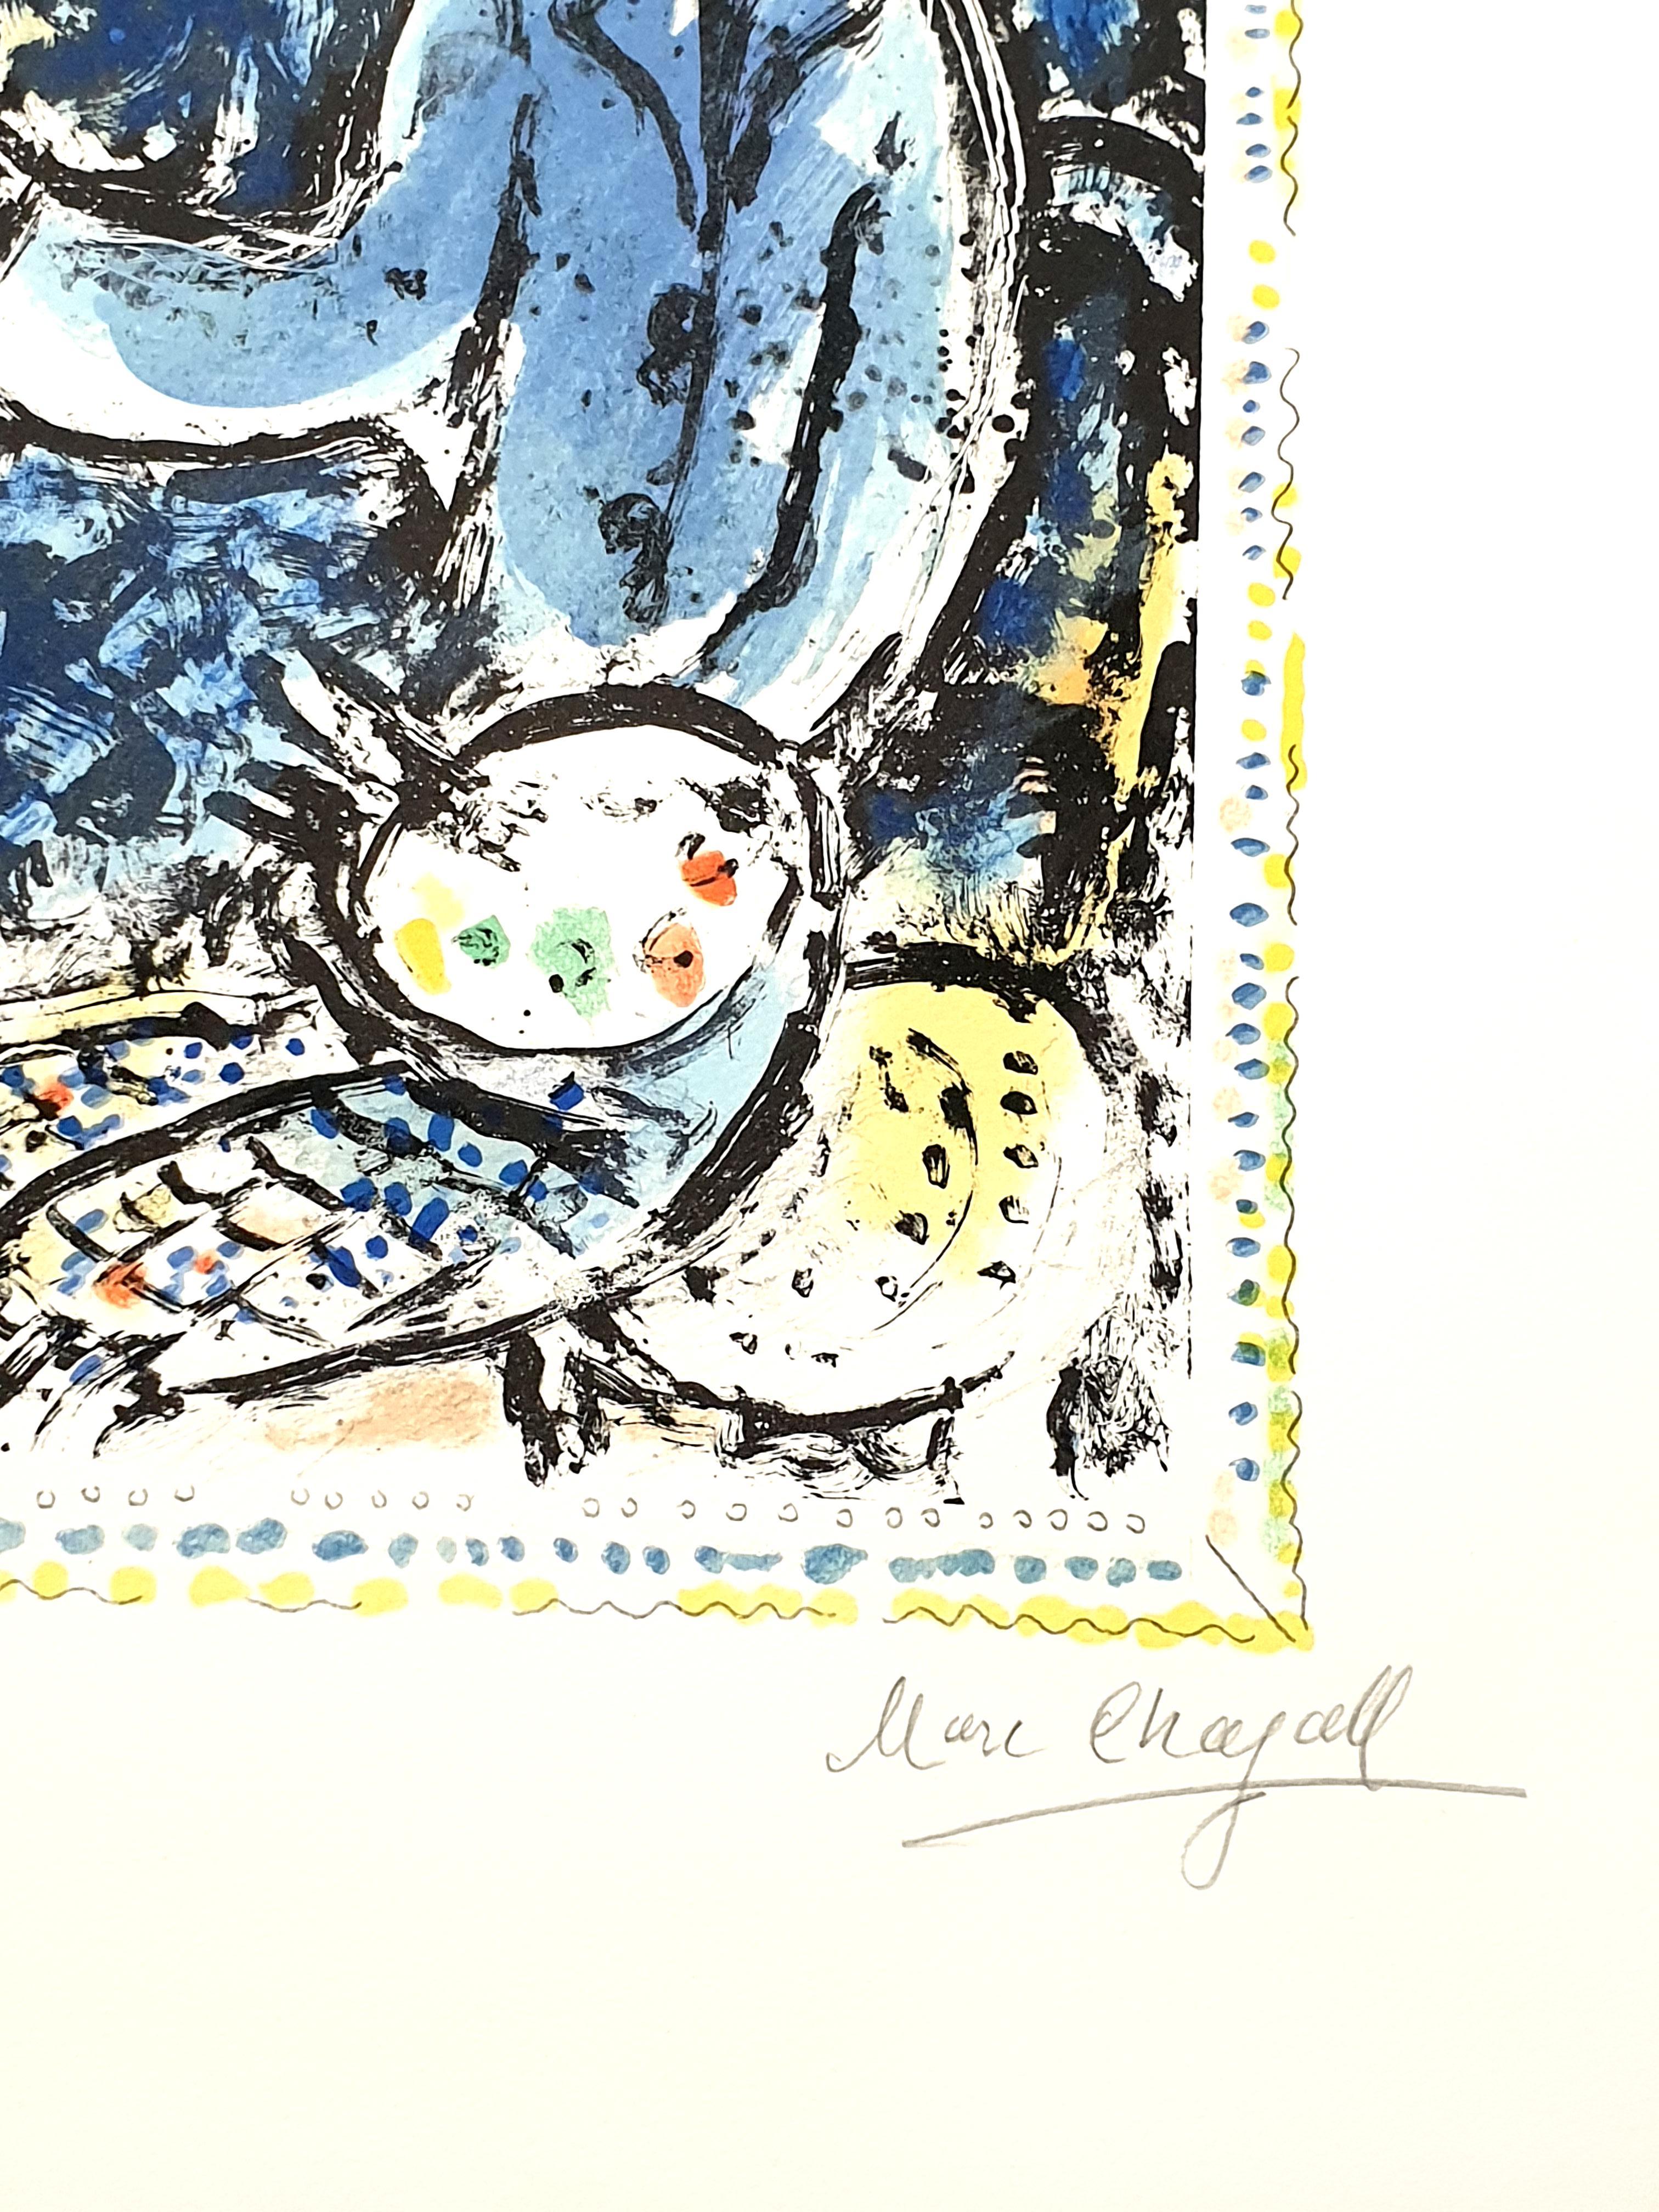 Marc Chagall - The Blue Workshop - Original Handsigned Lithograph 1